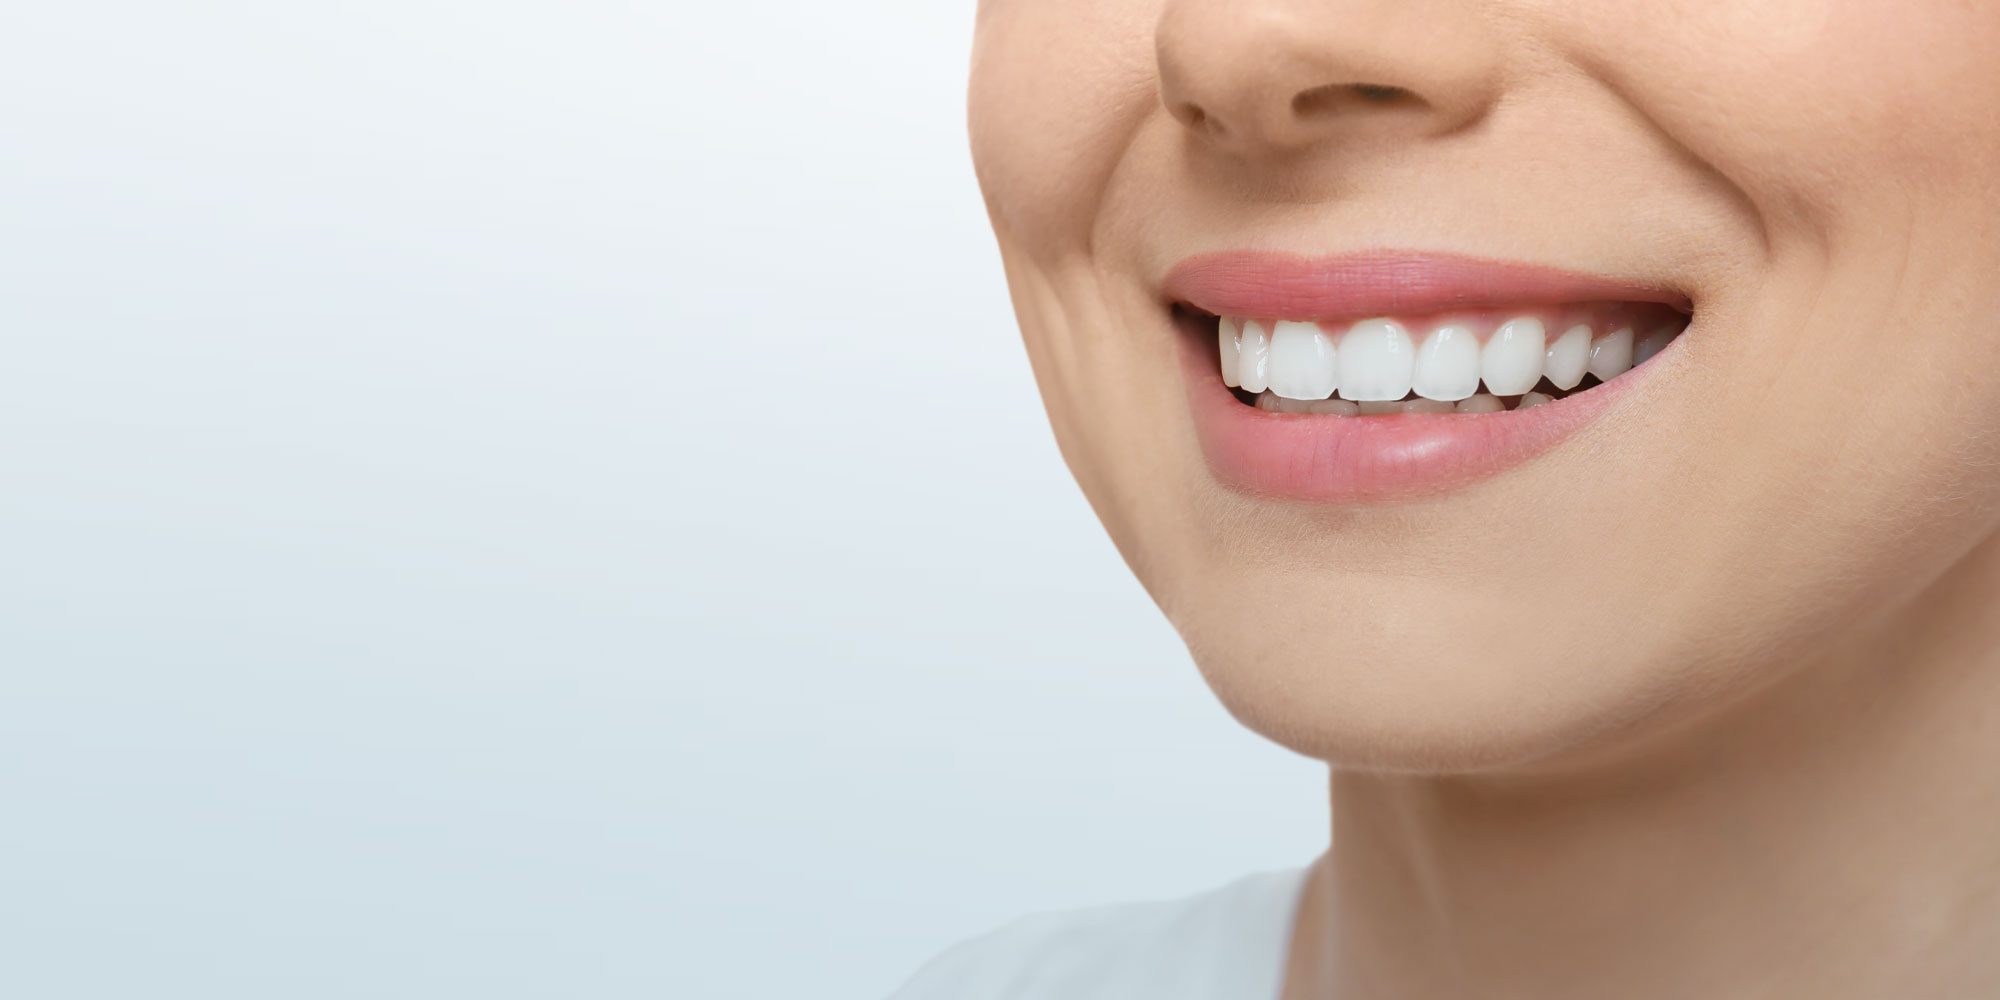 orthodontics patient smiling